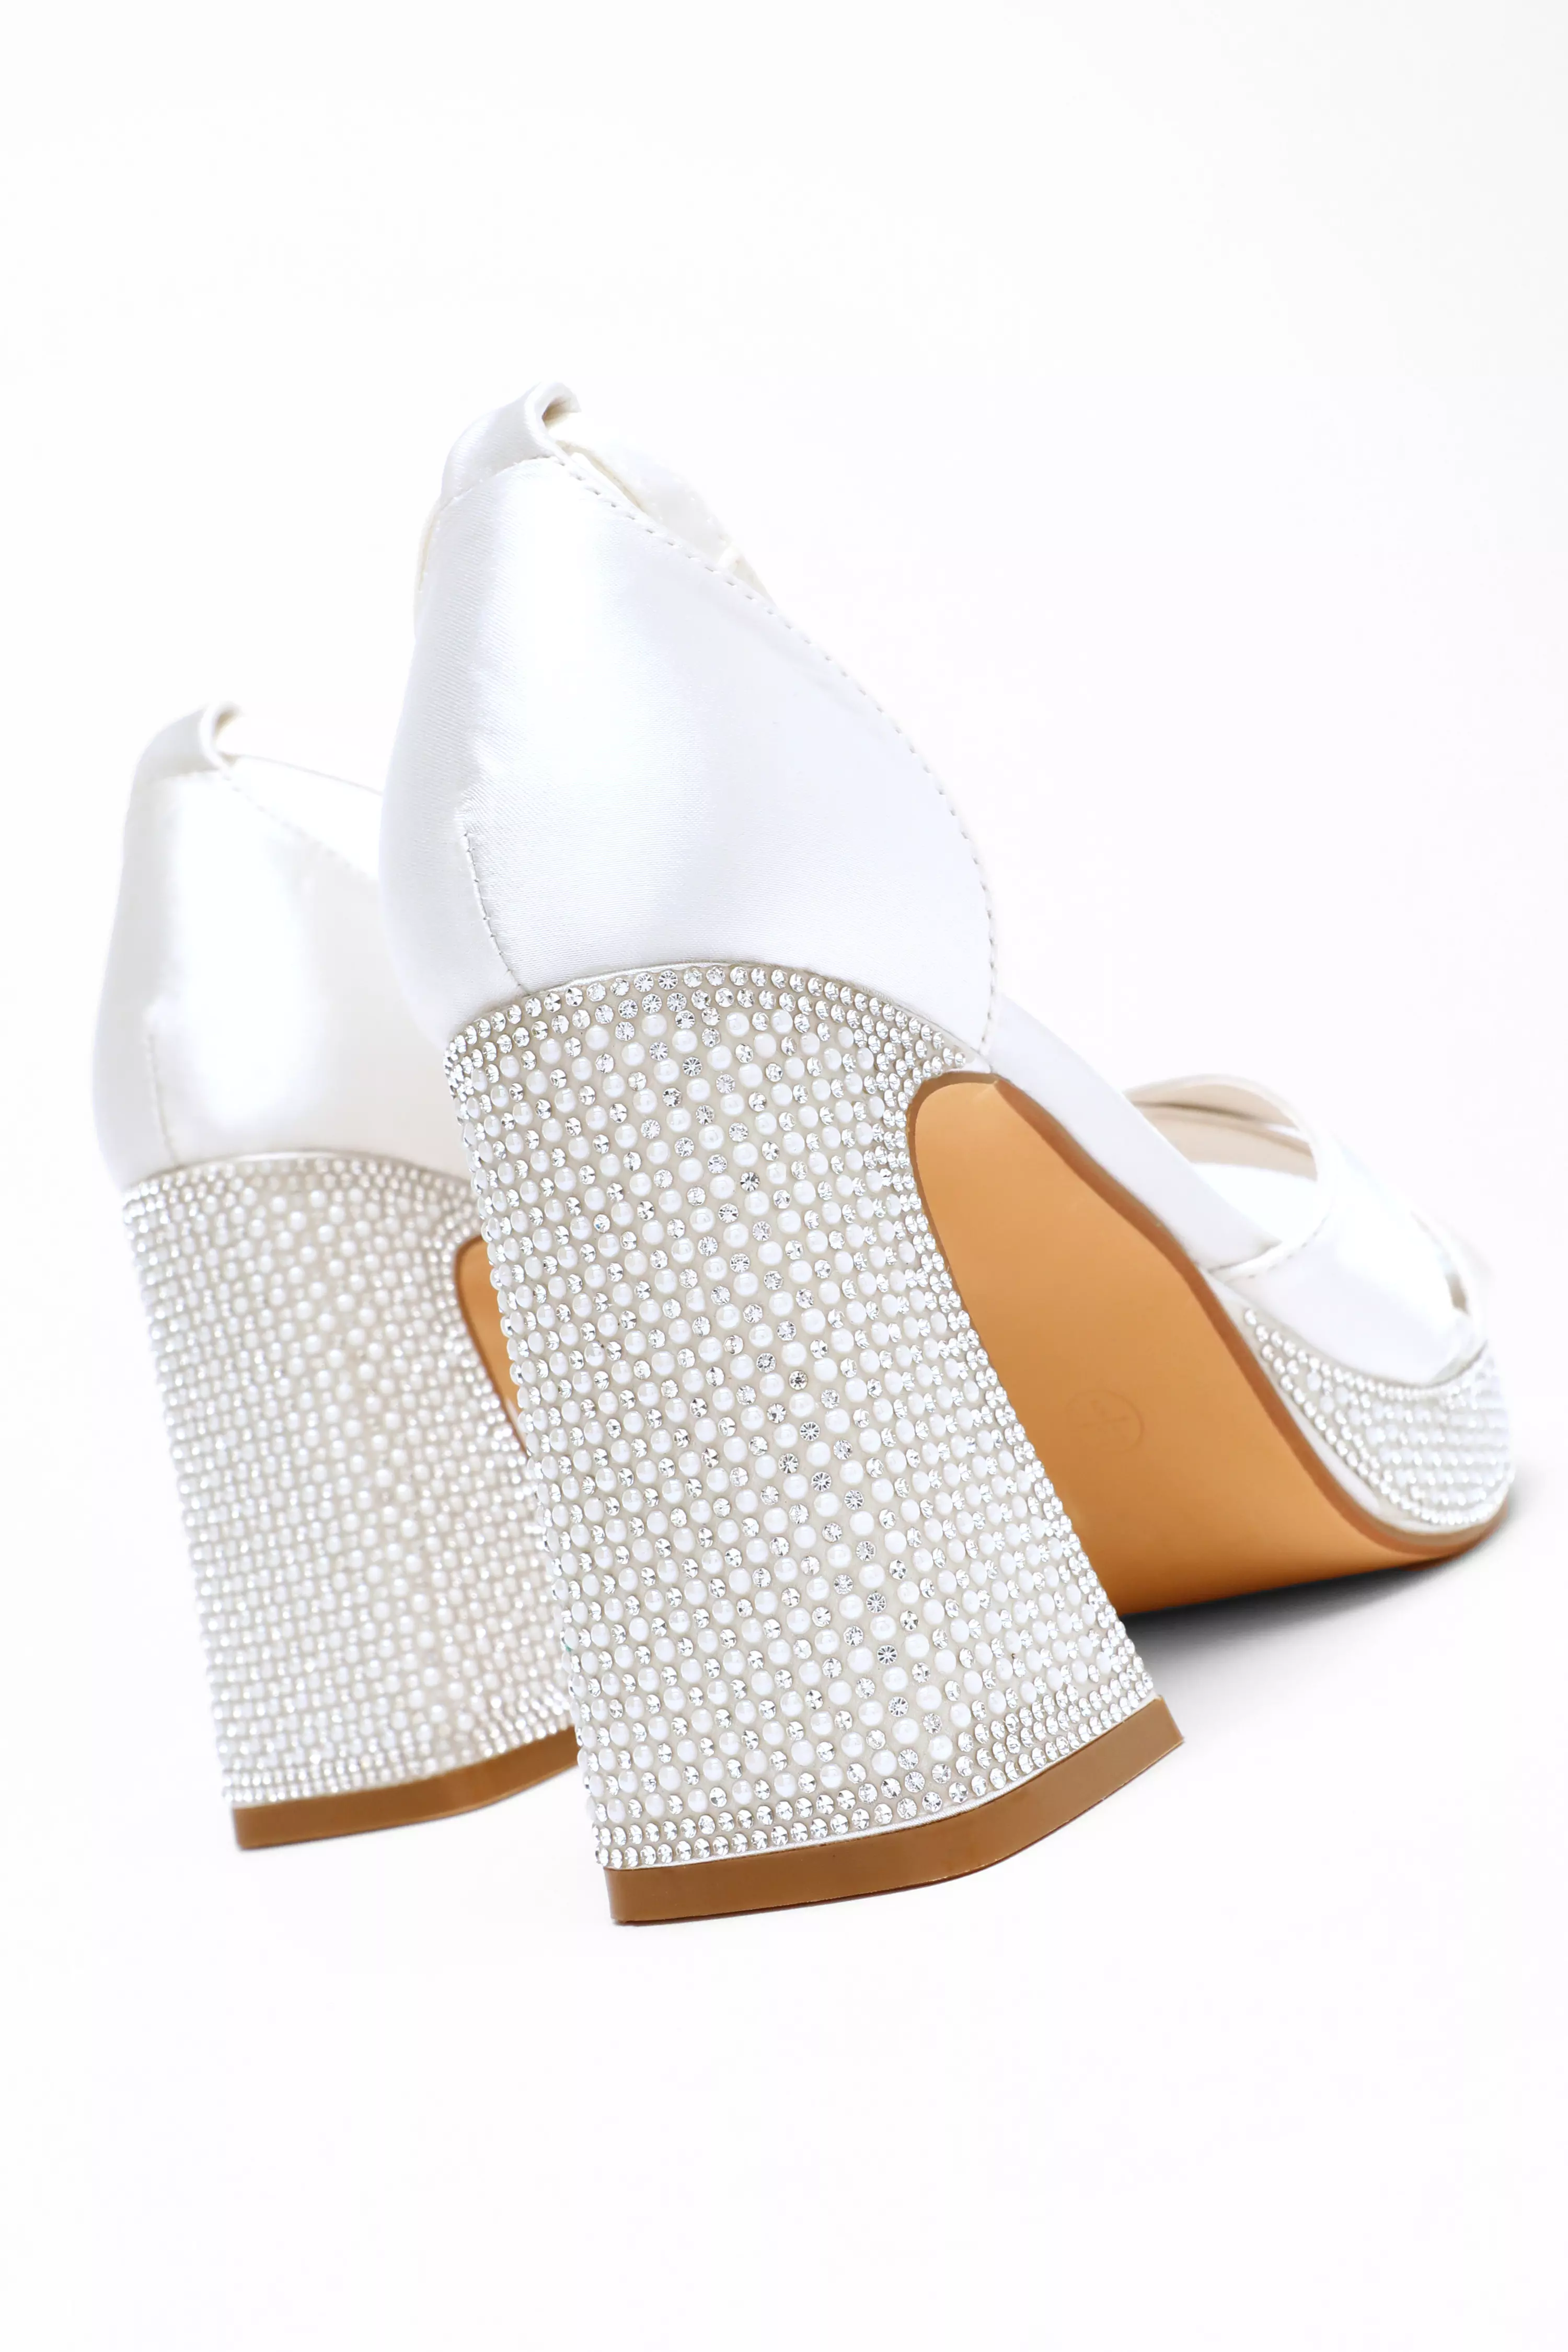 Bridal White Satin Diamante Platform Heels